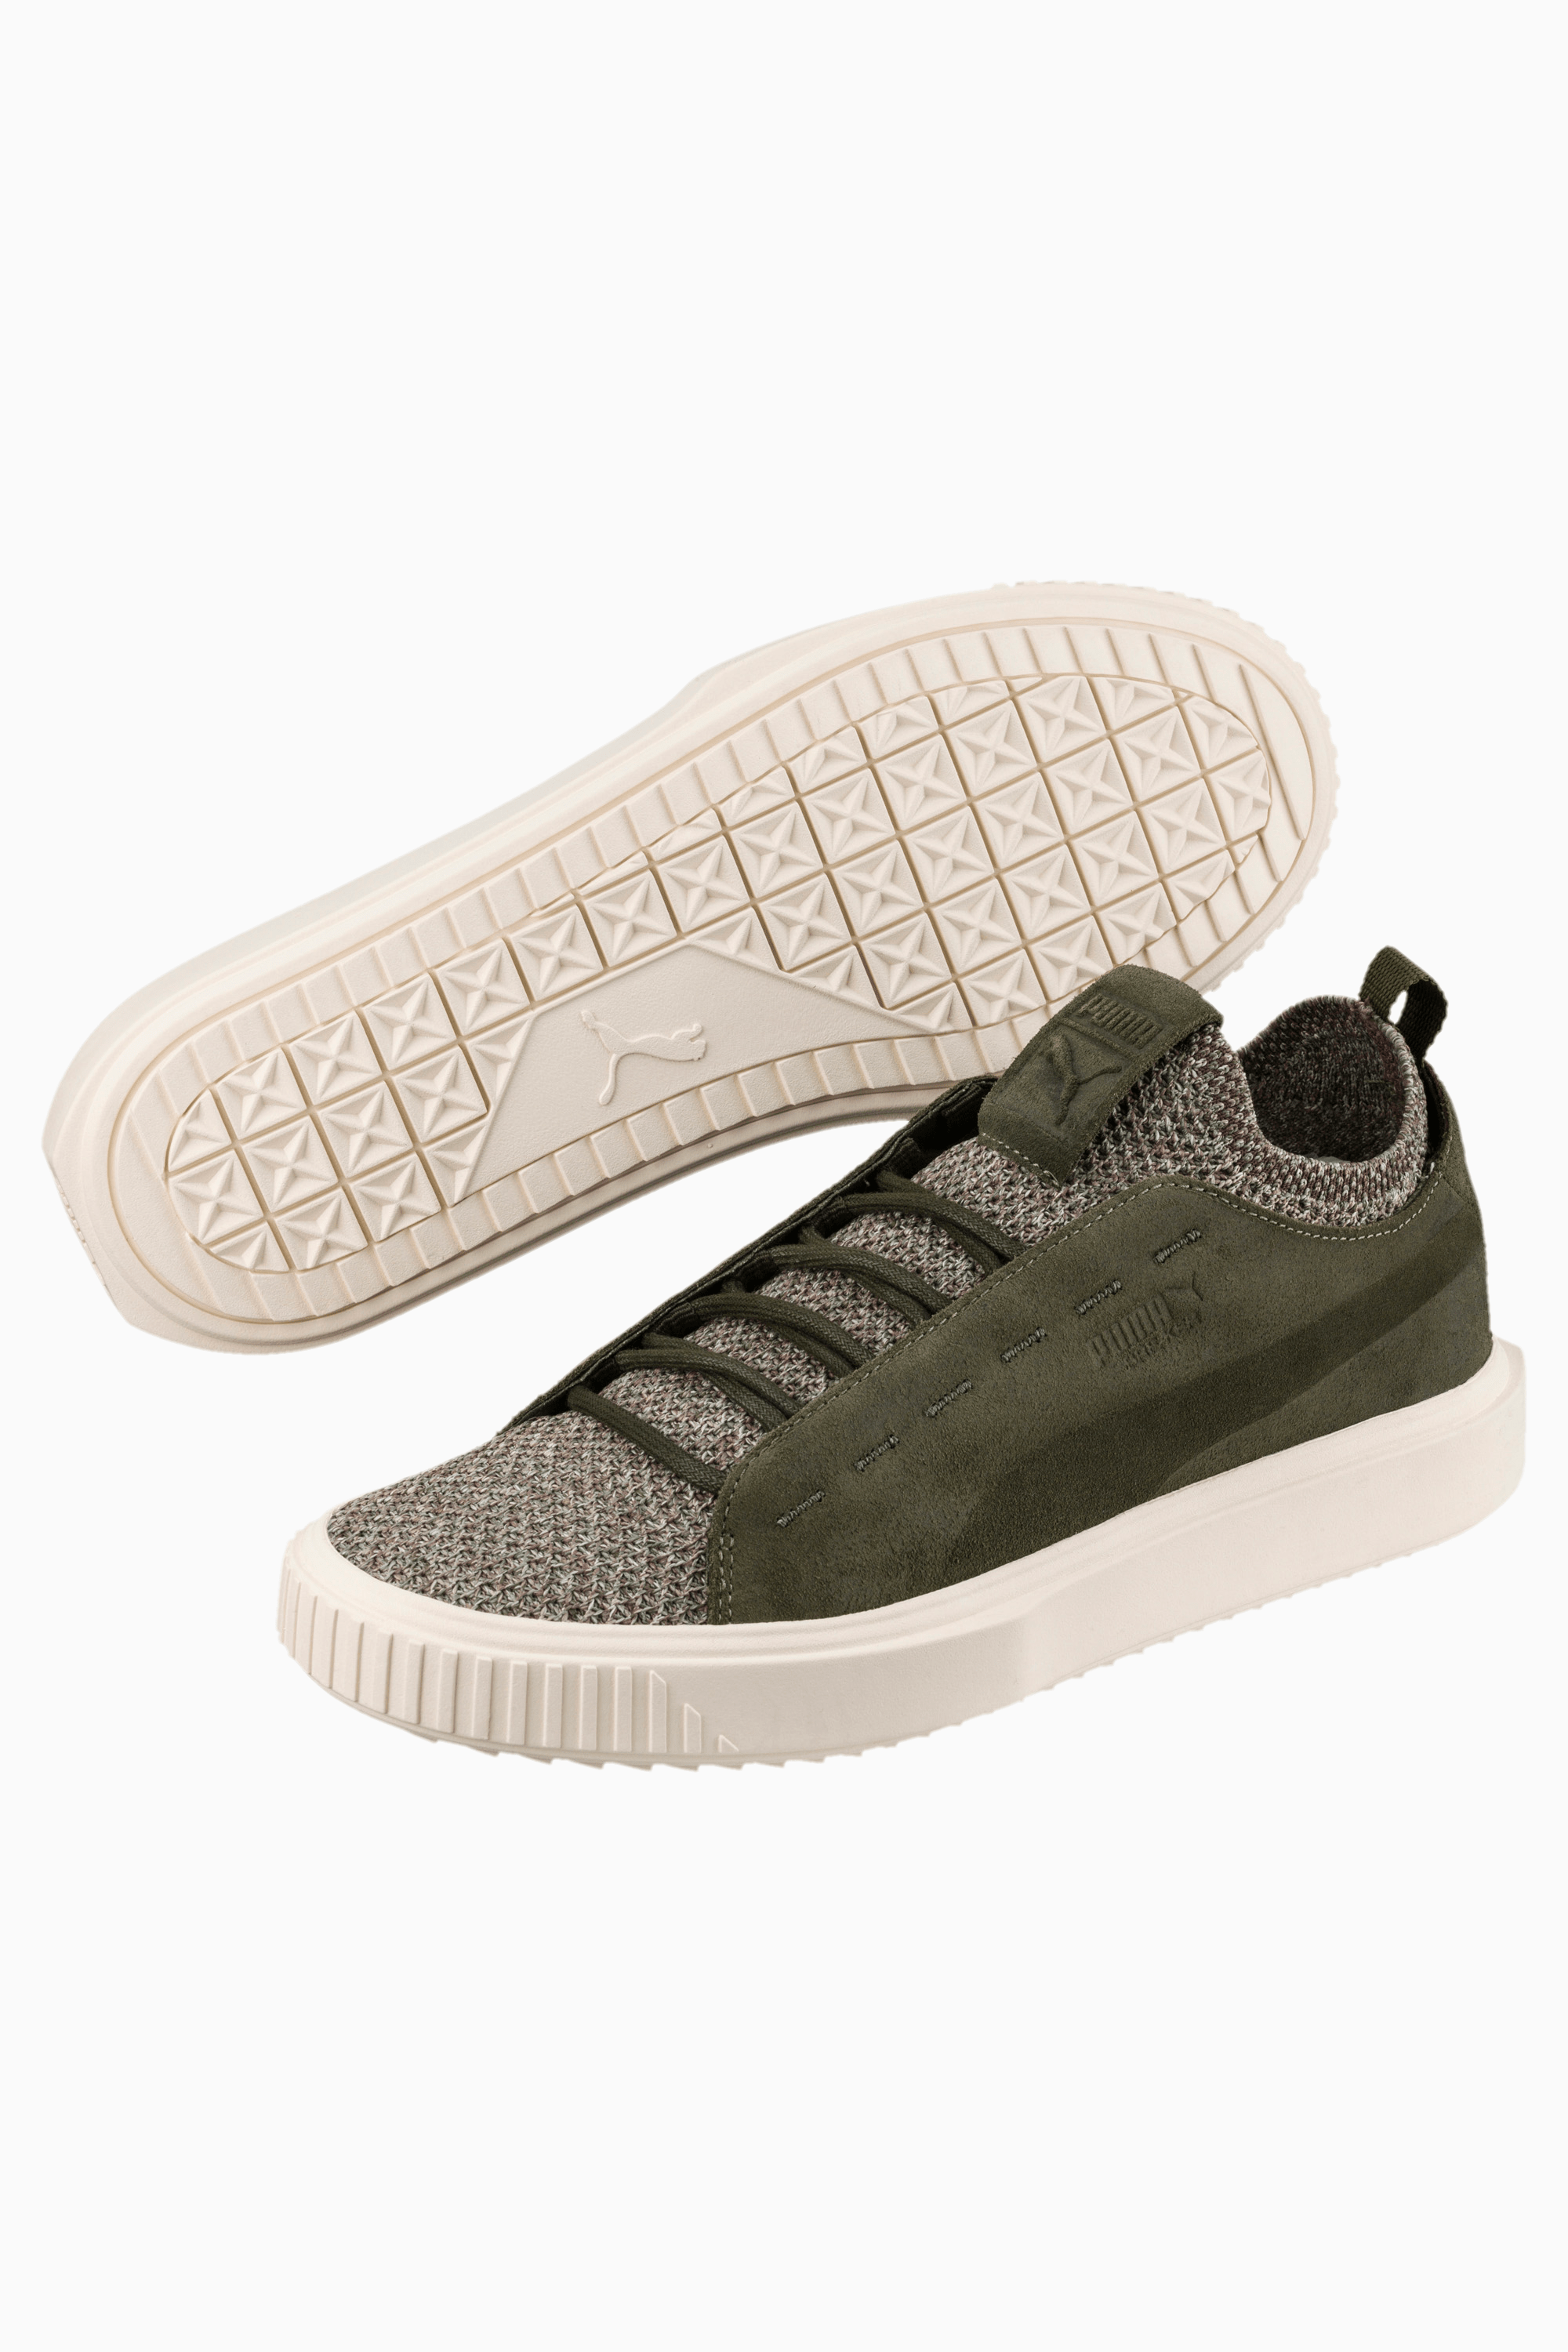 Puma Breaker Knit Sneakers Sunfaded Shoes Casual - Black - Men's Size 9 New